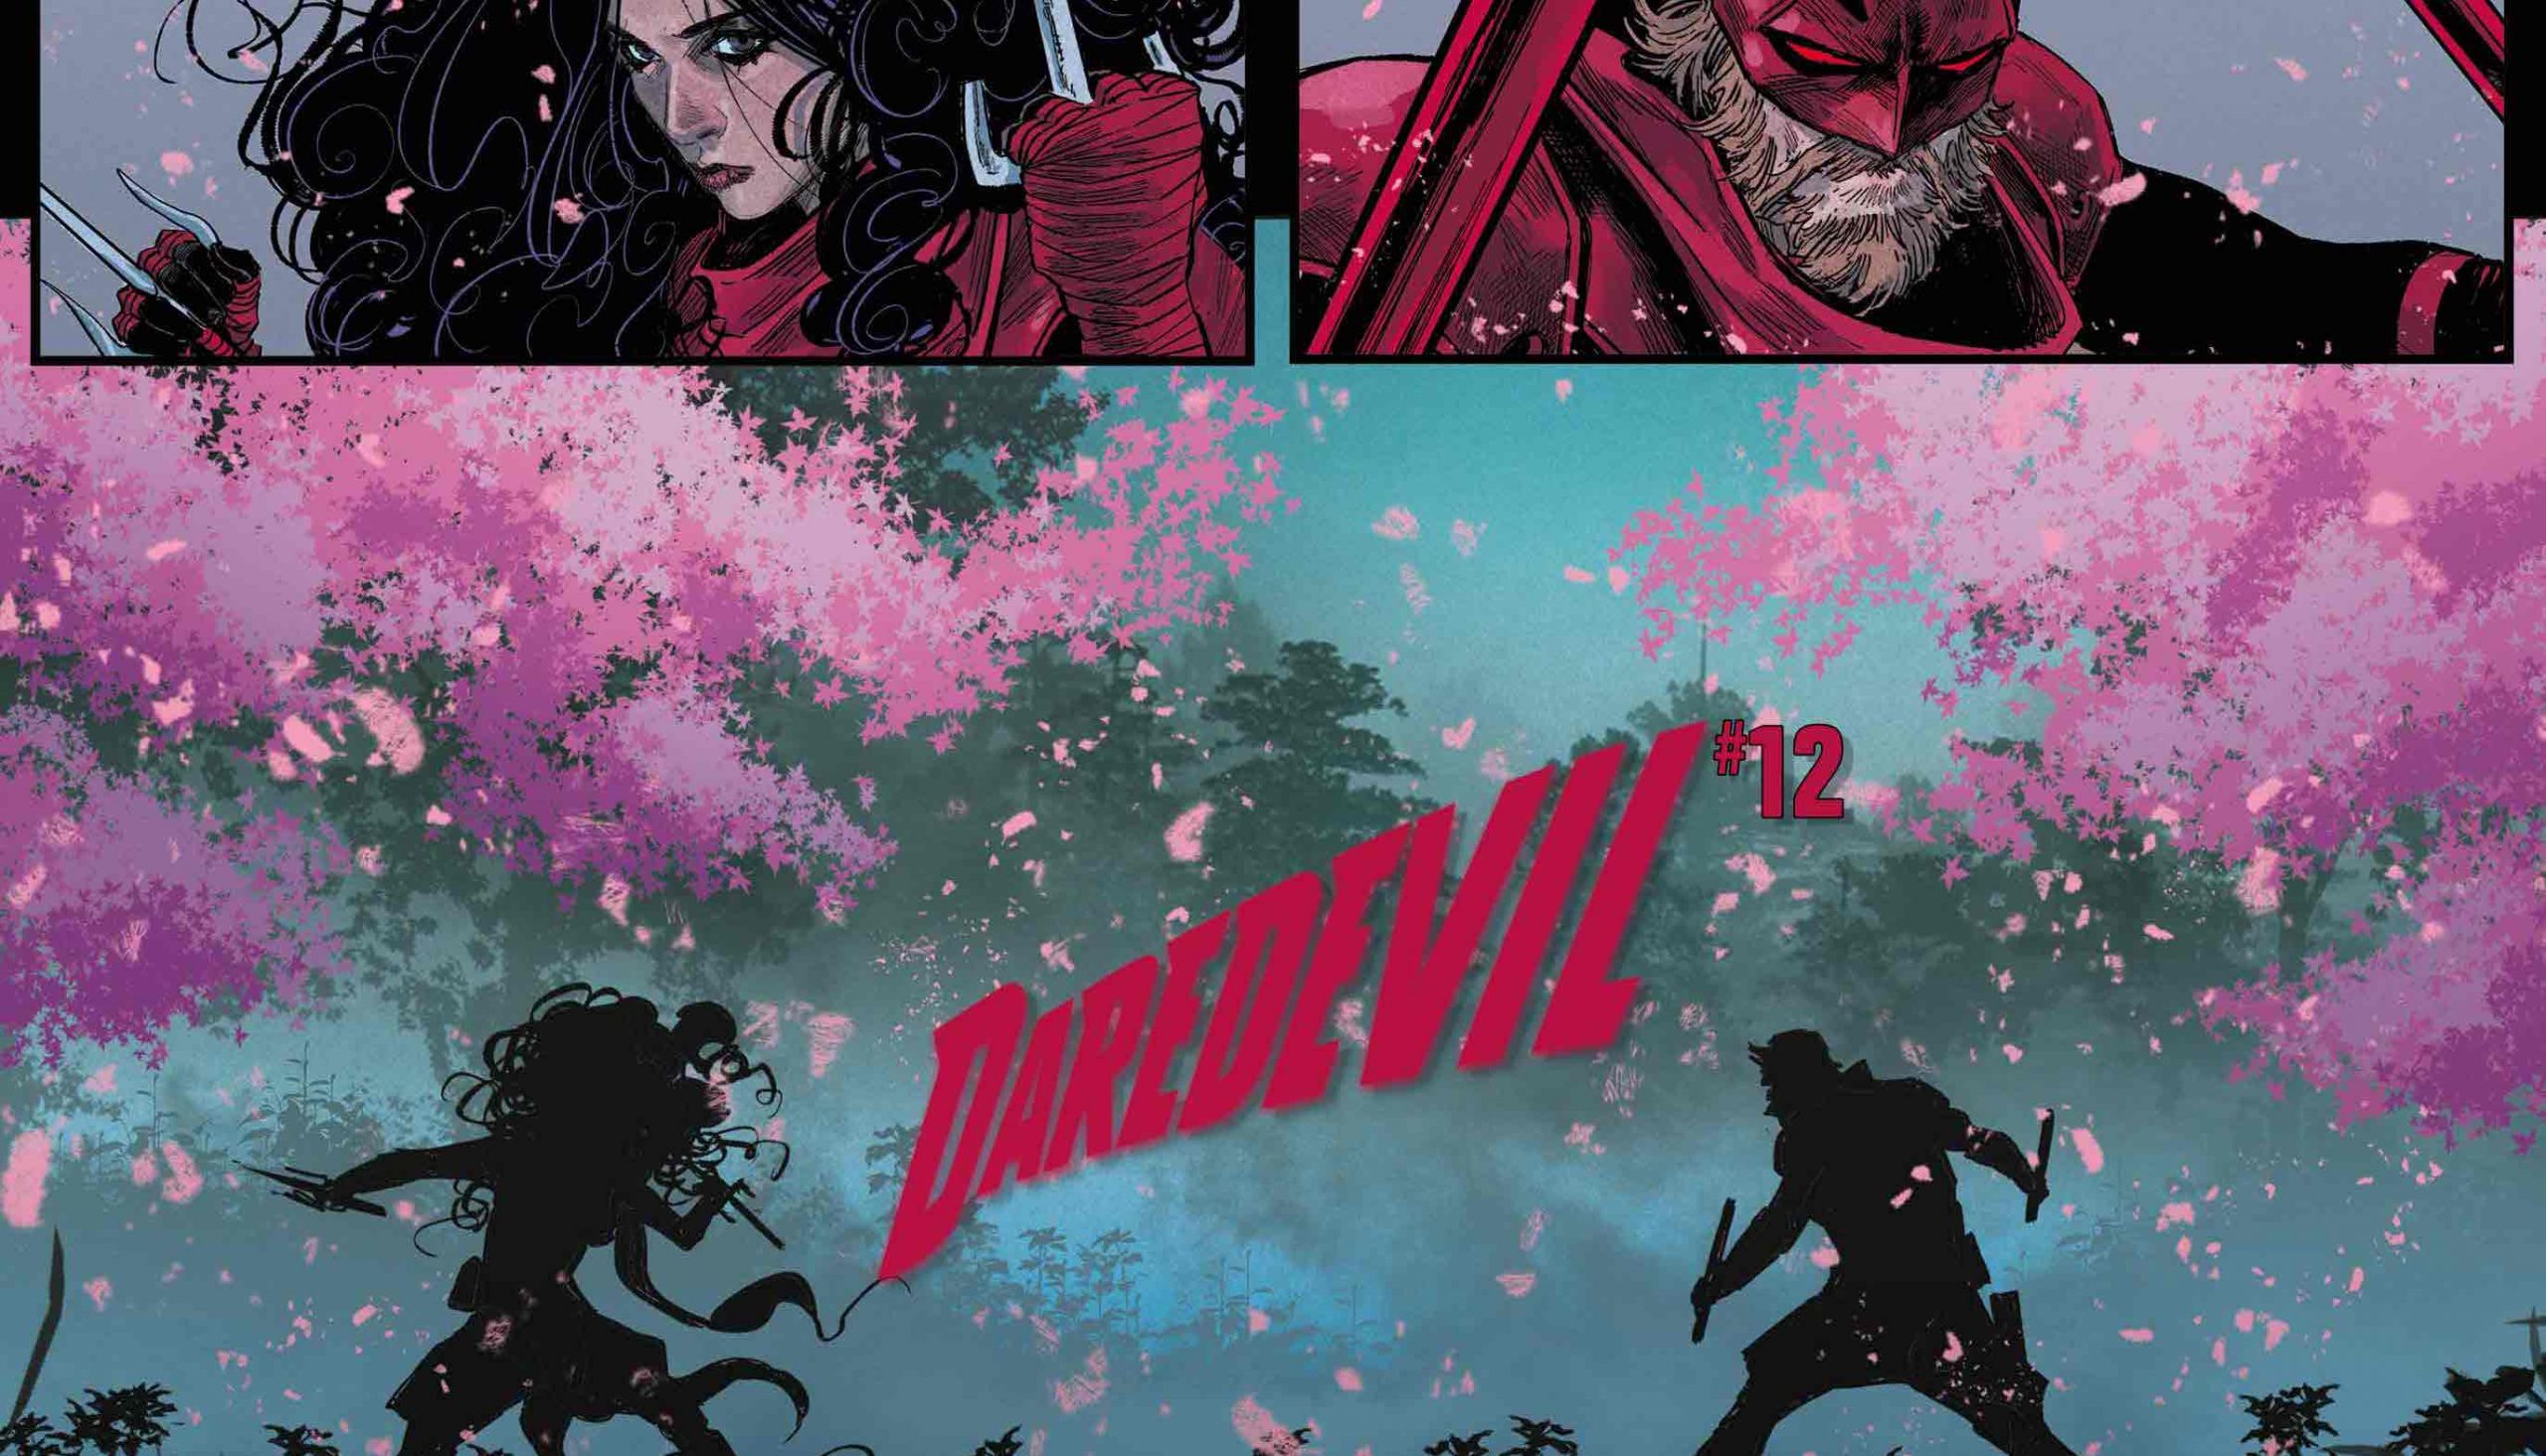 'Daredevil' #12 features Elektra vs. Daredevil, who ya got?!